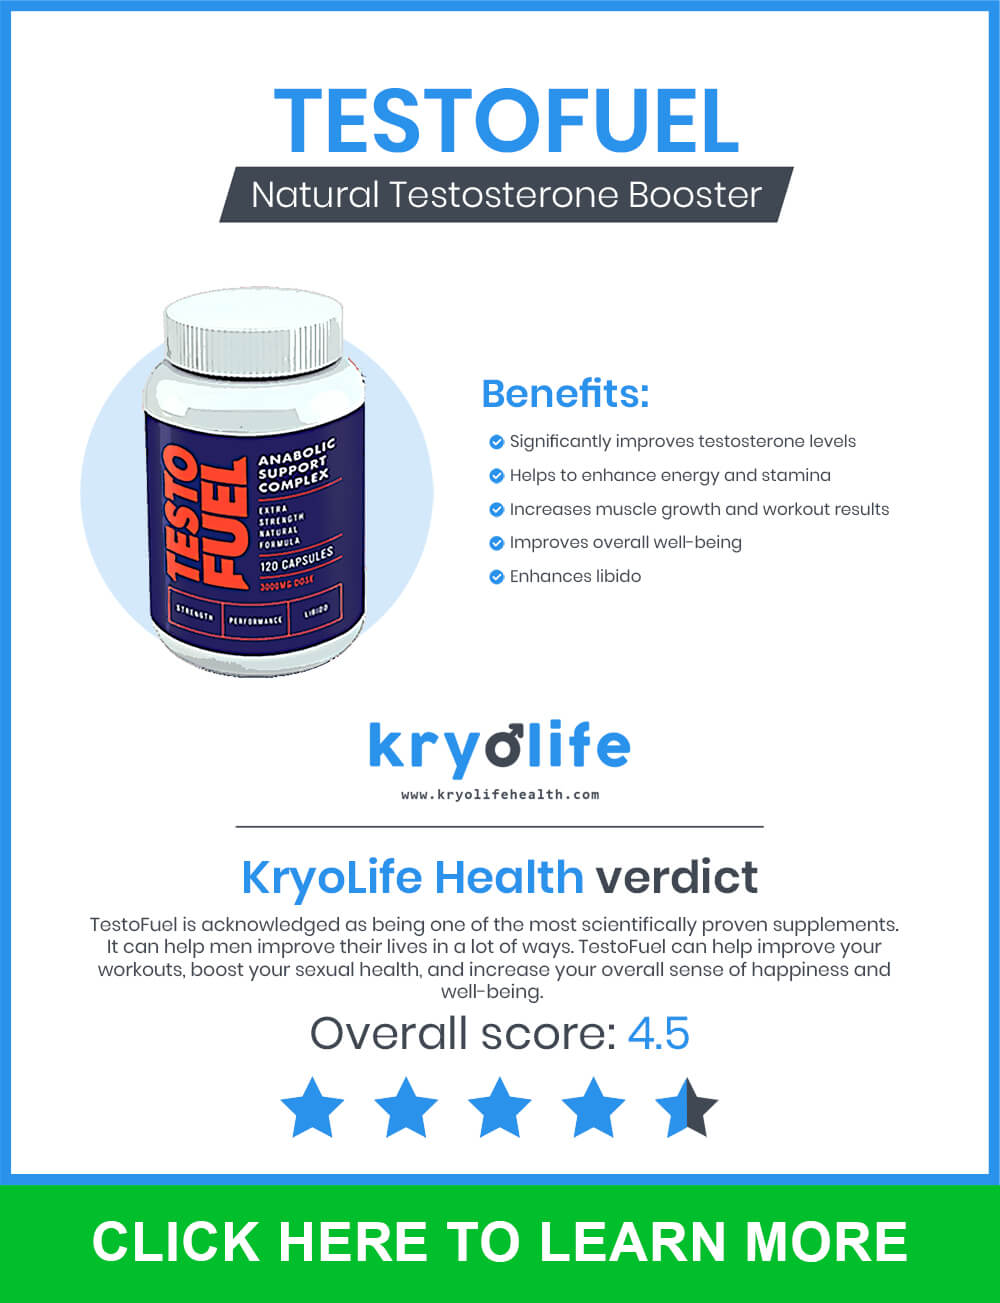 testofuel benefits infographic